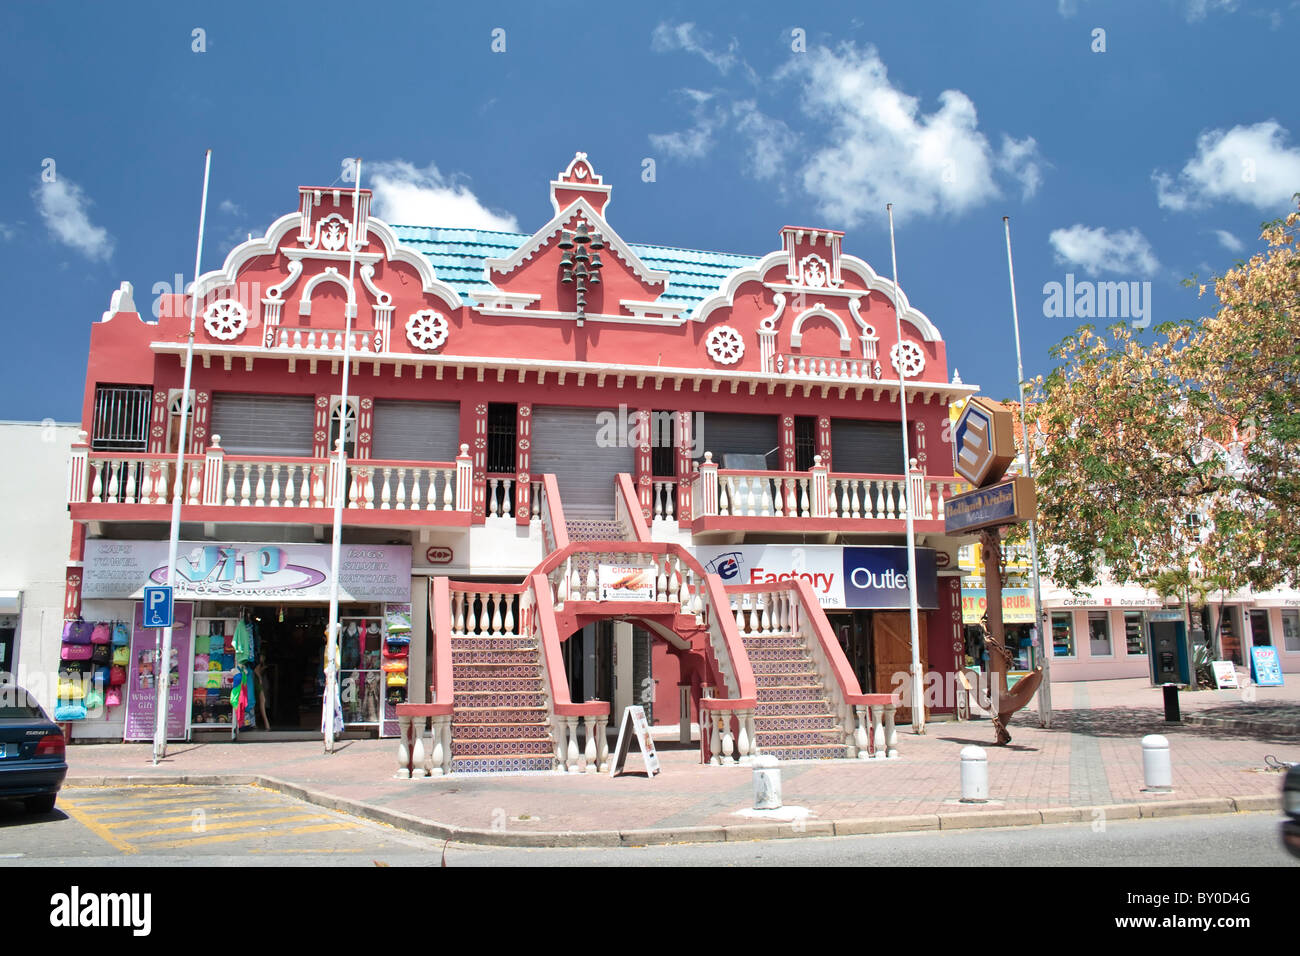 Geschenk und Souvenir speichert outdoor Mall Holland Aruba Oranjestad Aruba Stockfoto